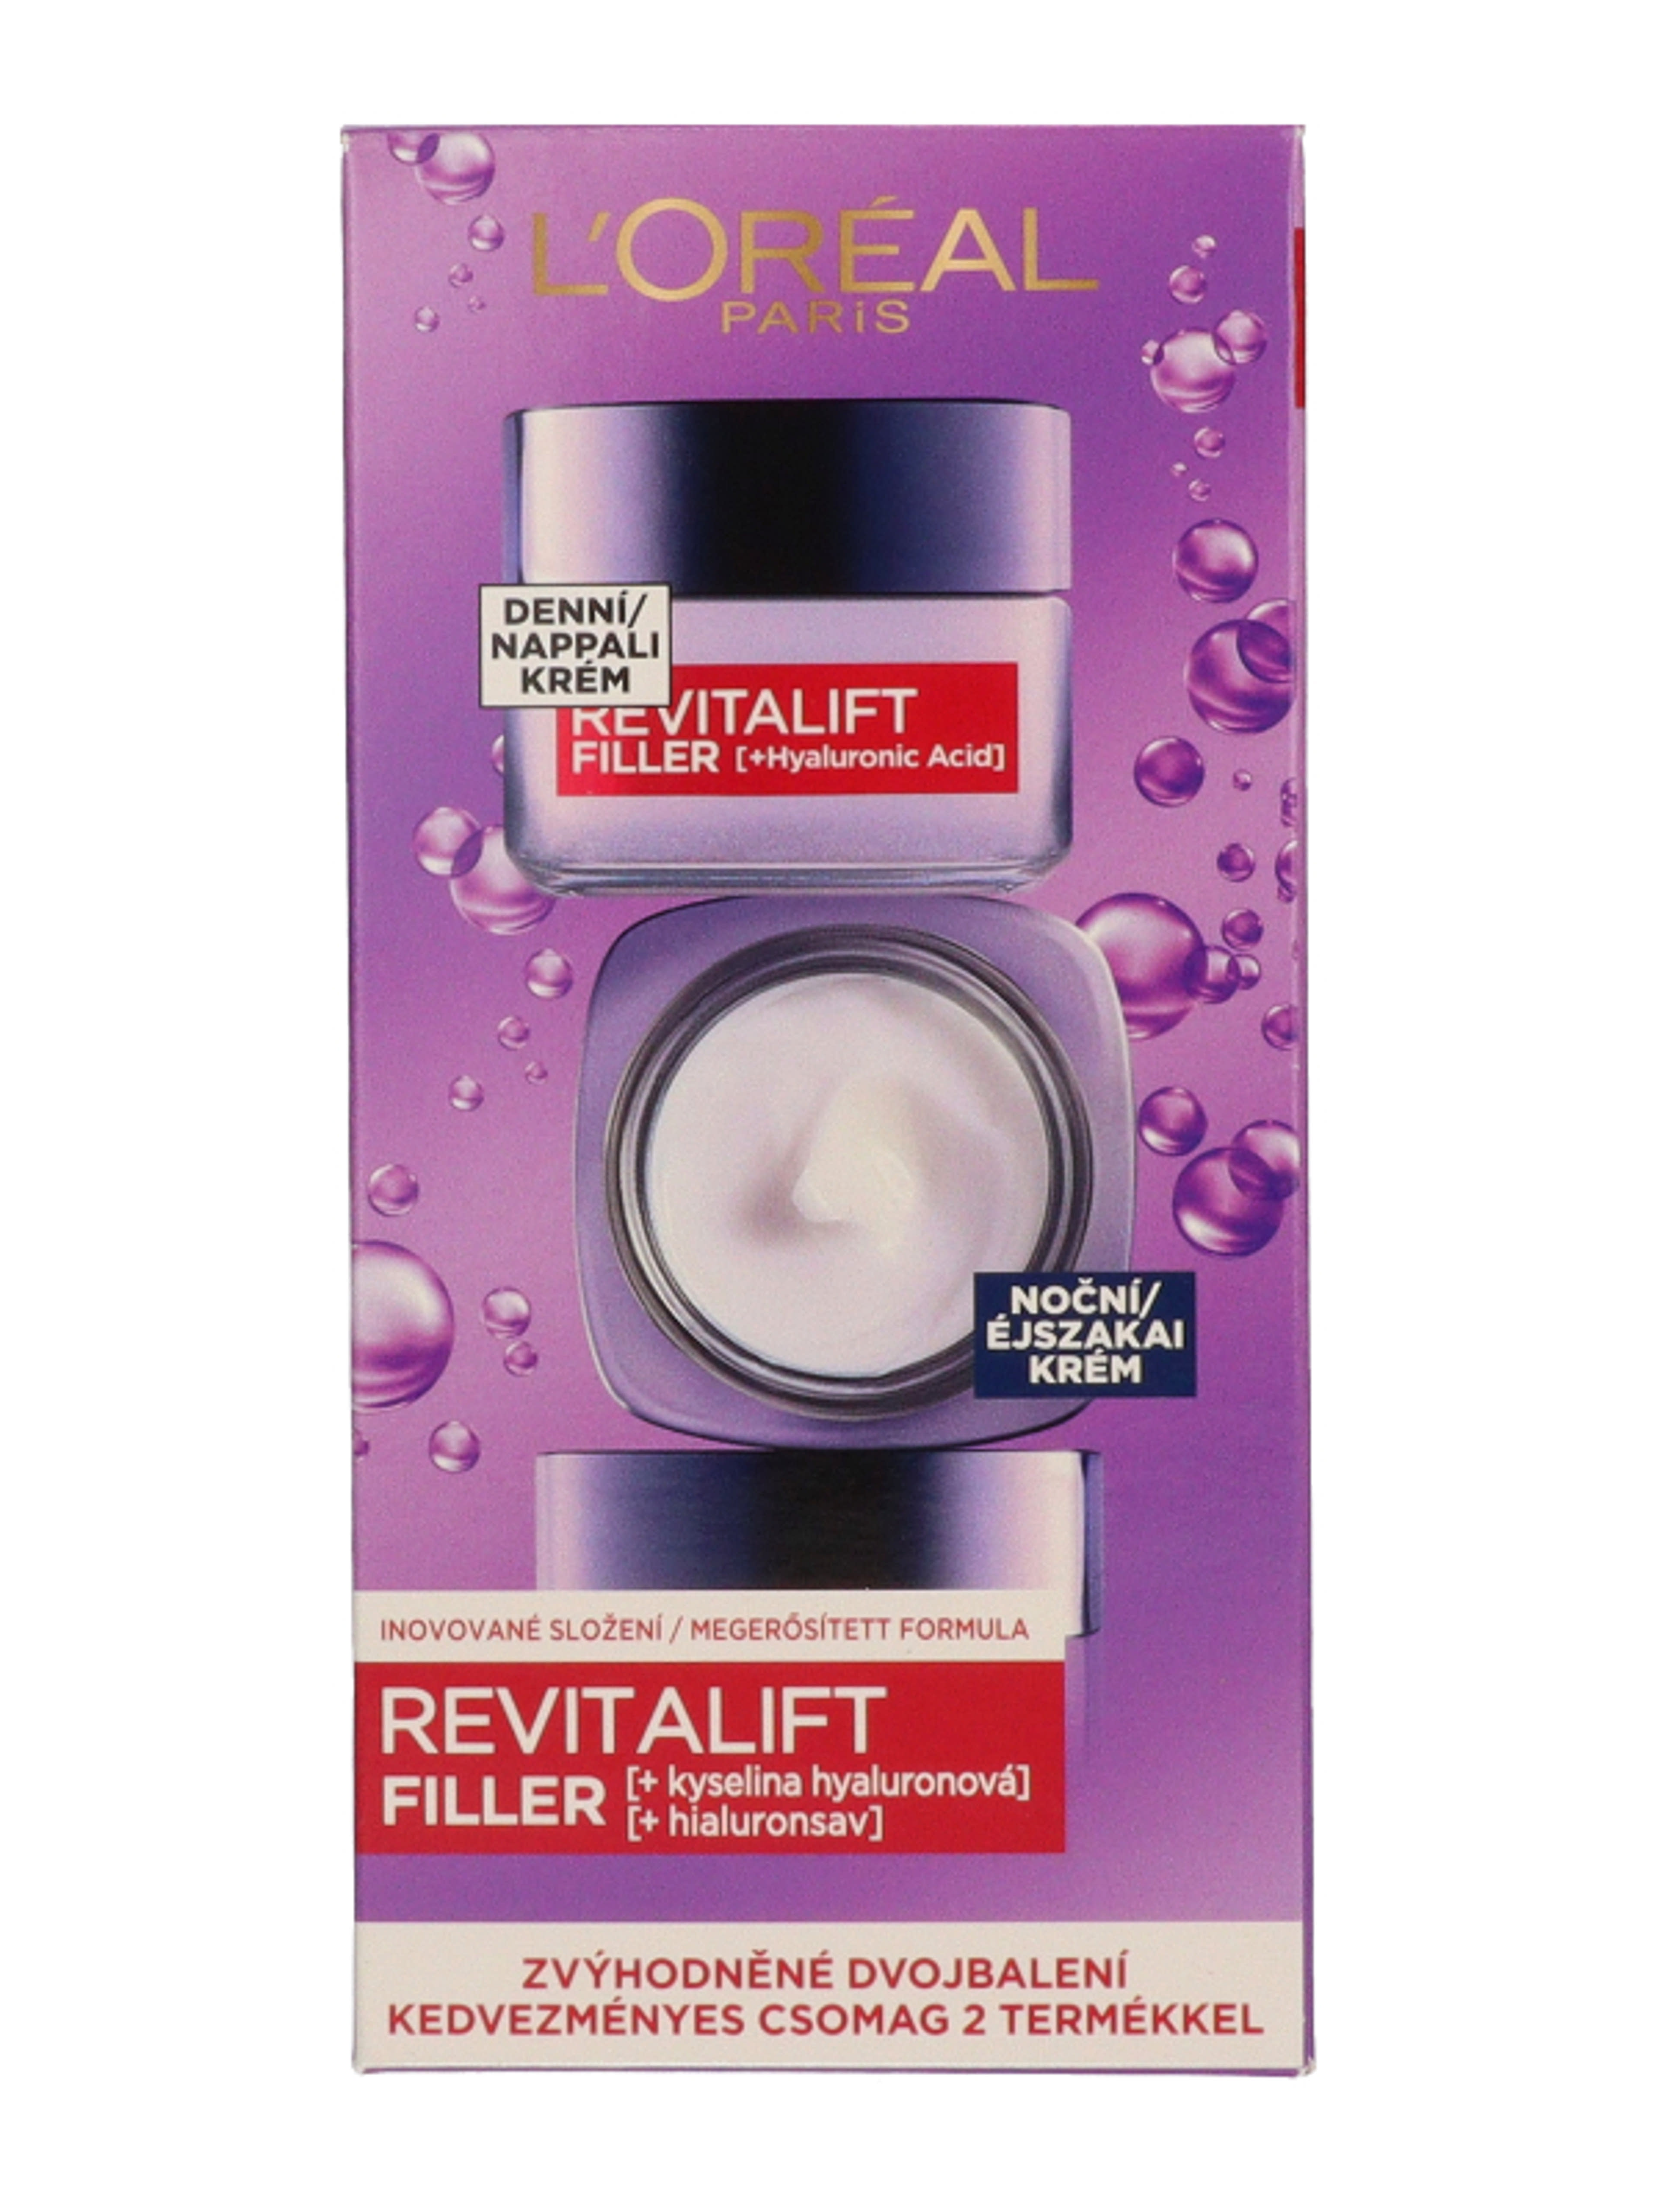 L'Oréal Paris Revitalift Filler arckrém dupack 2x50 ml - 100 ml